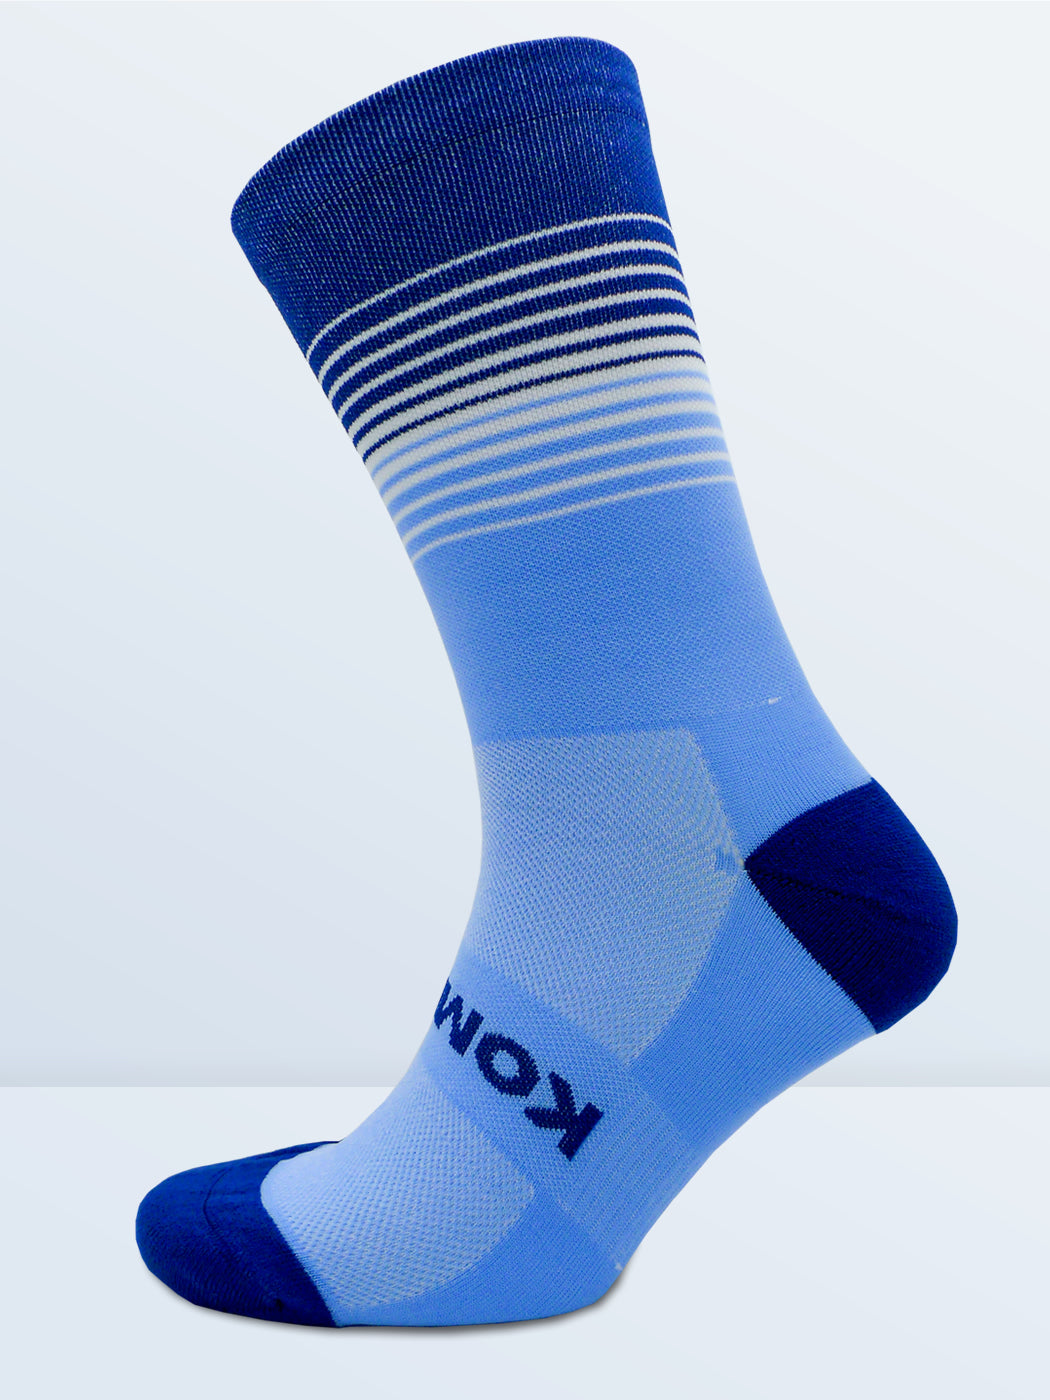 Swagger Socks - Sky & Navy Blue